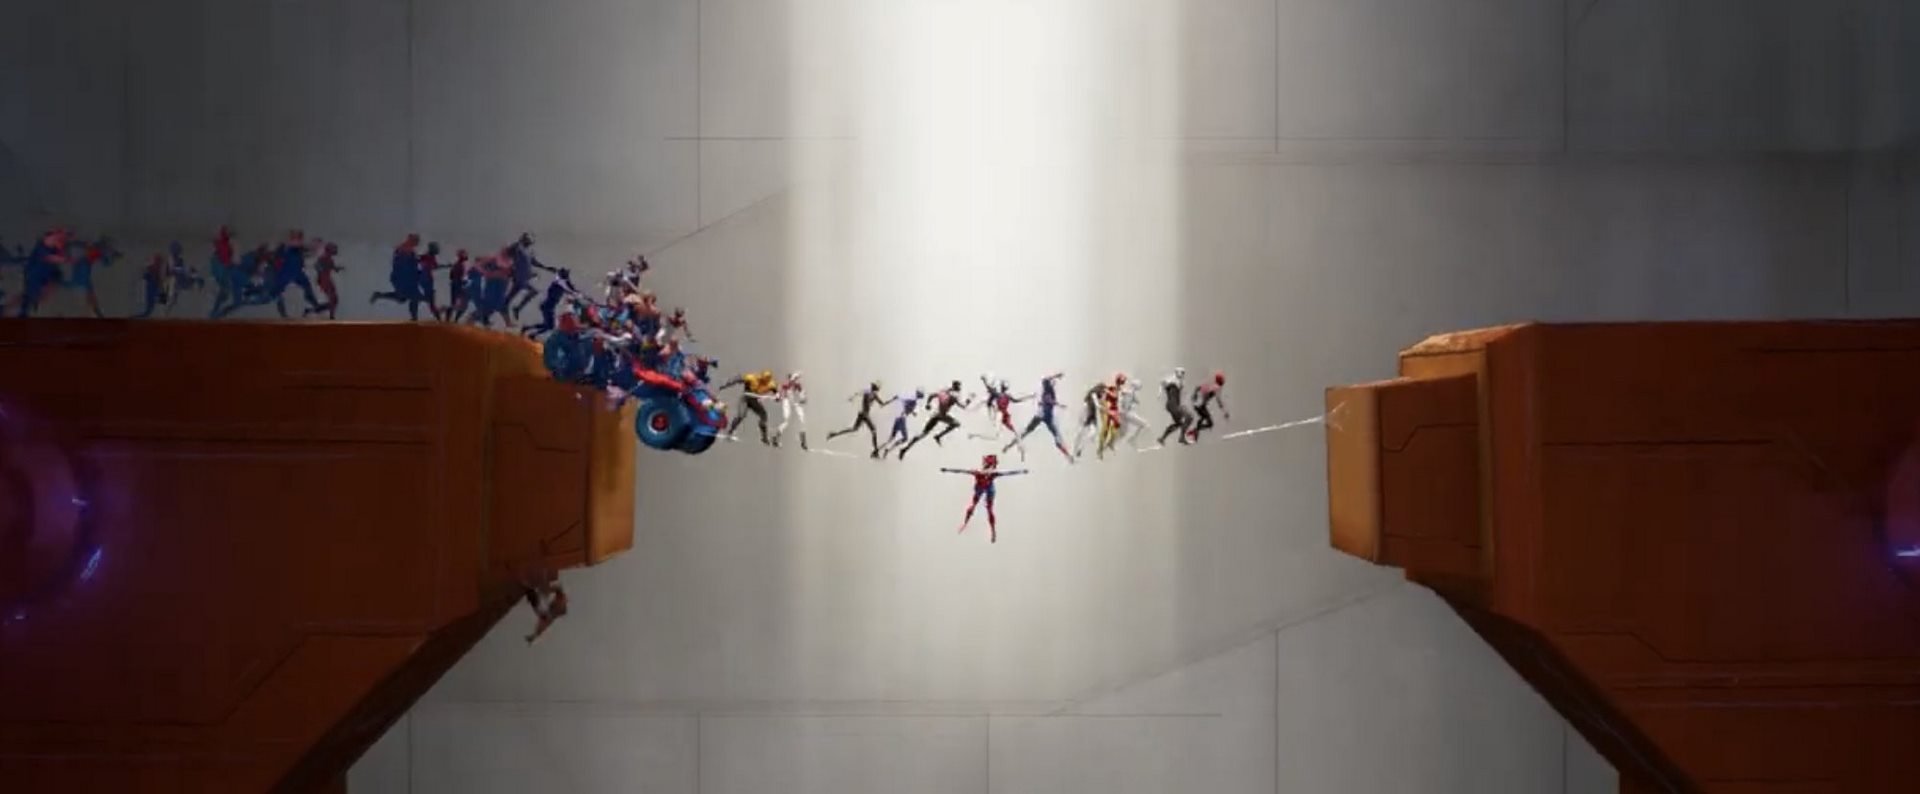 نبرد مردان عنکبوتی در انیمیشن اسپایدرمن 2